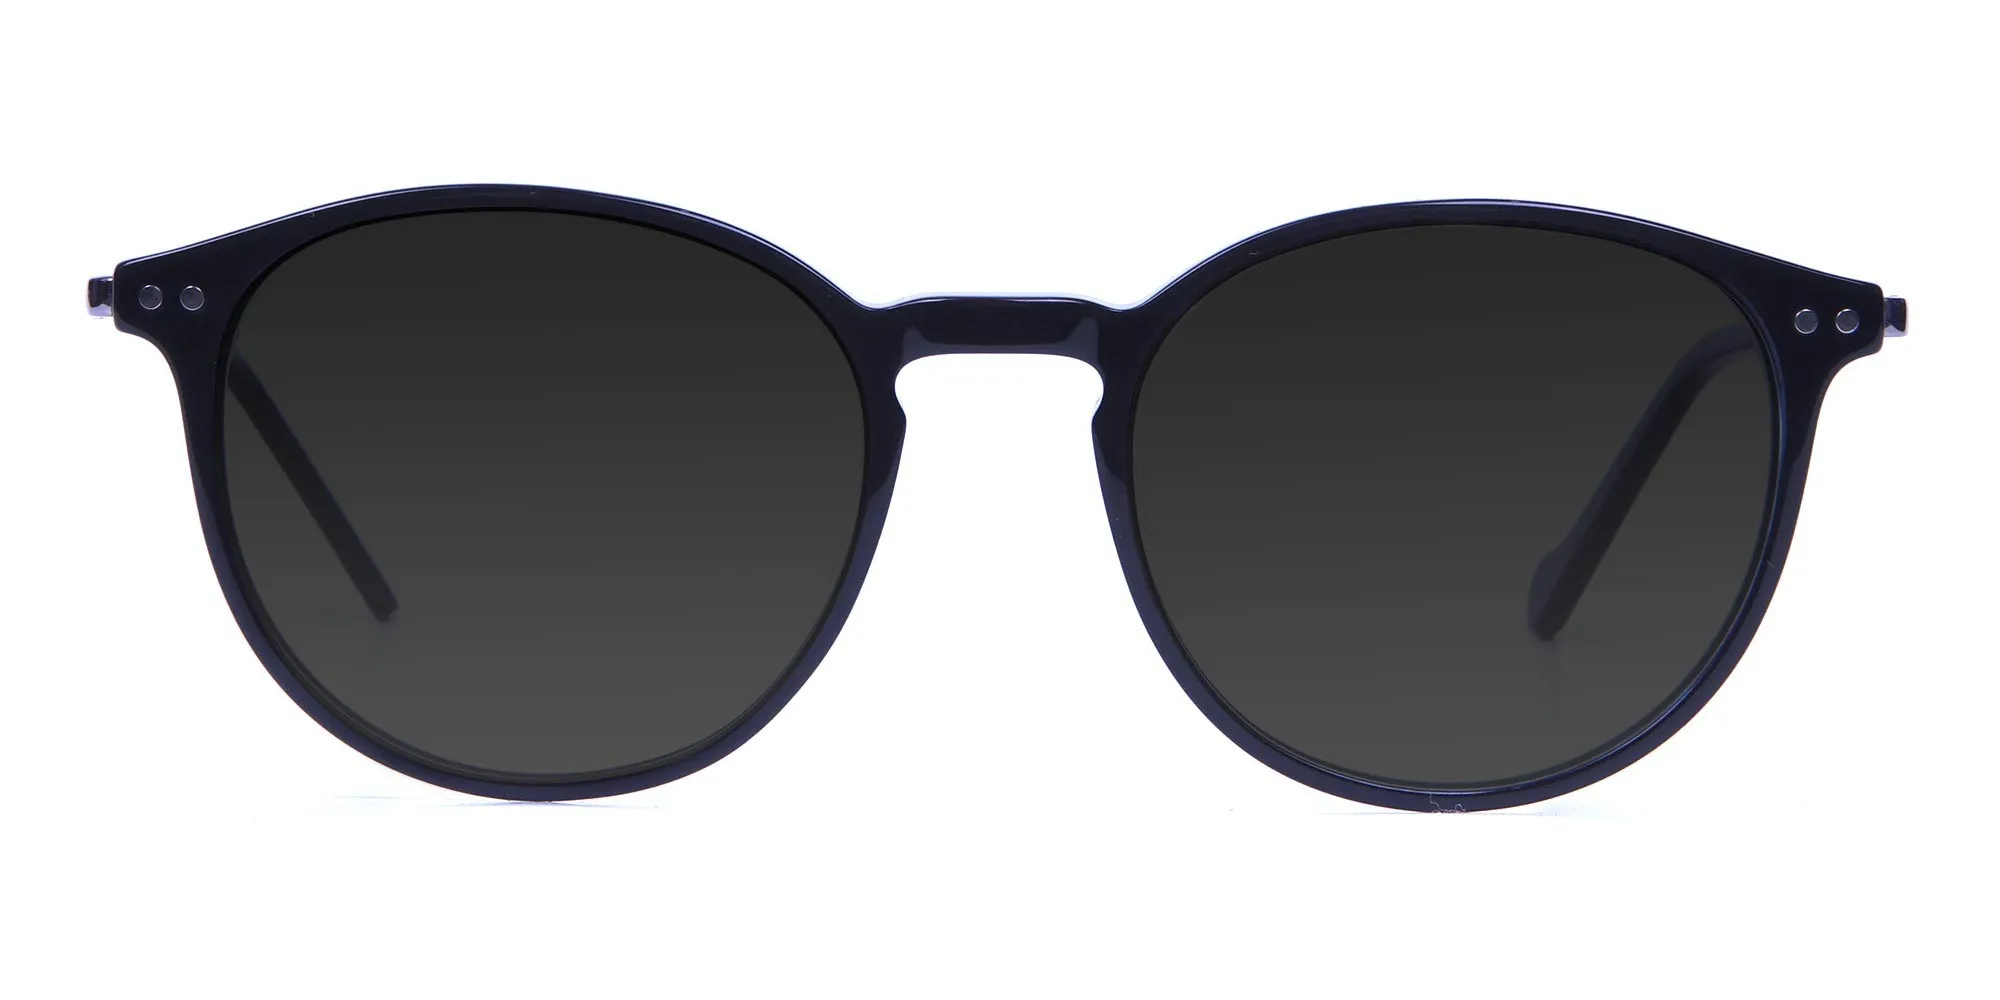 Dark Grey Sunglasses with Black Round Frame - 2